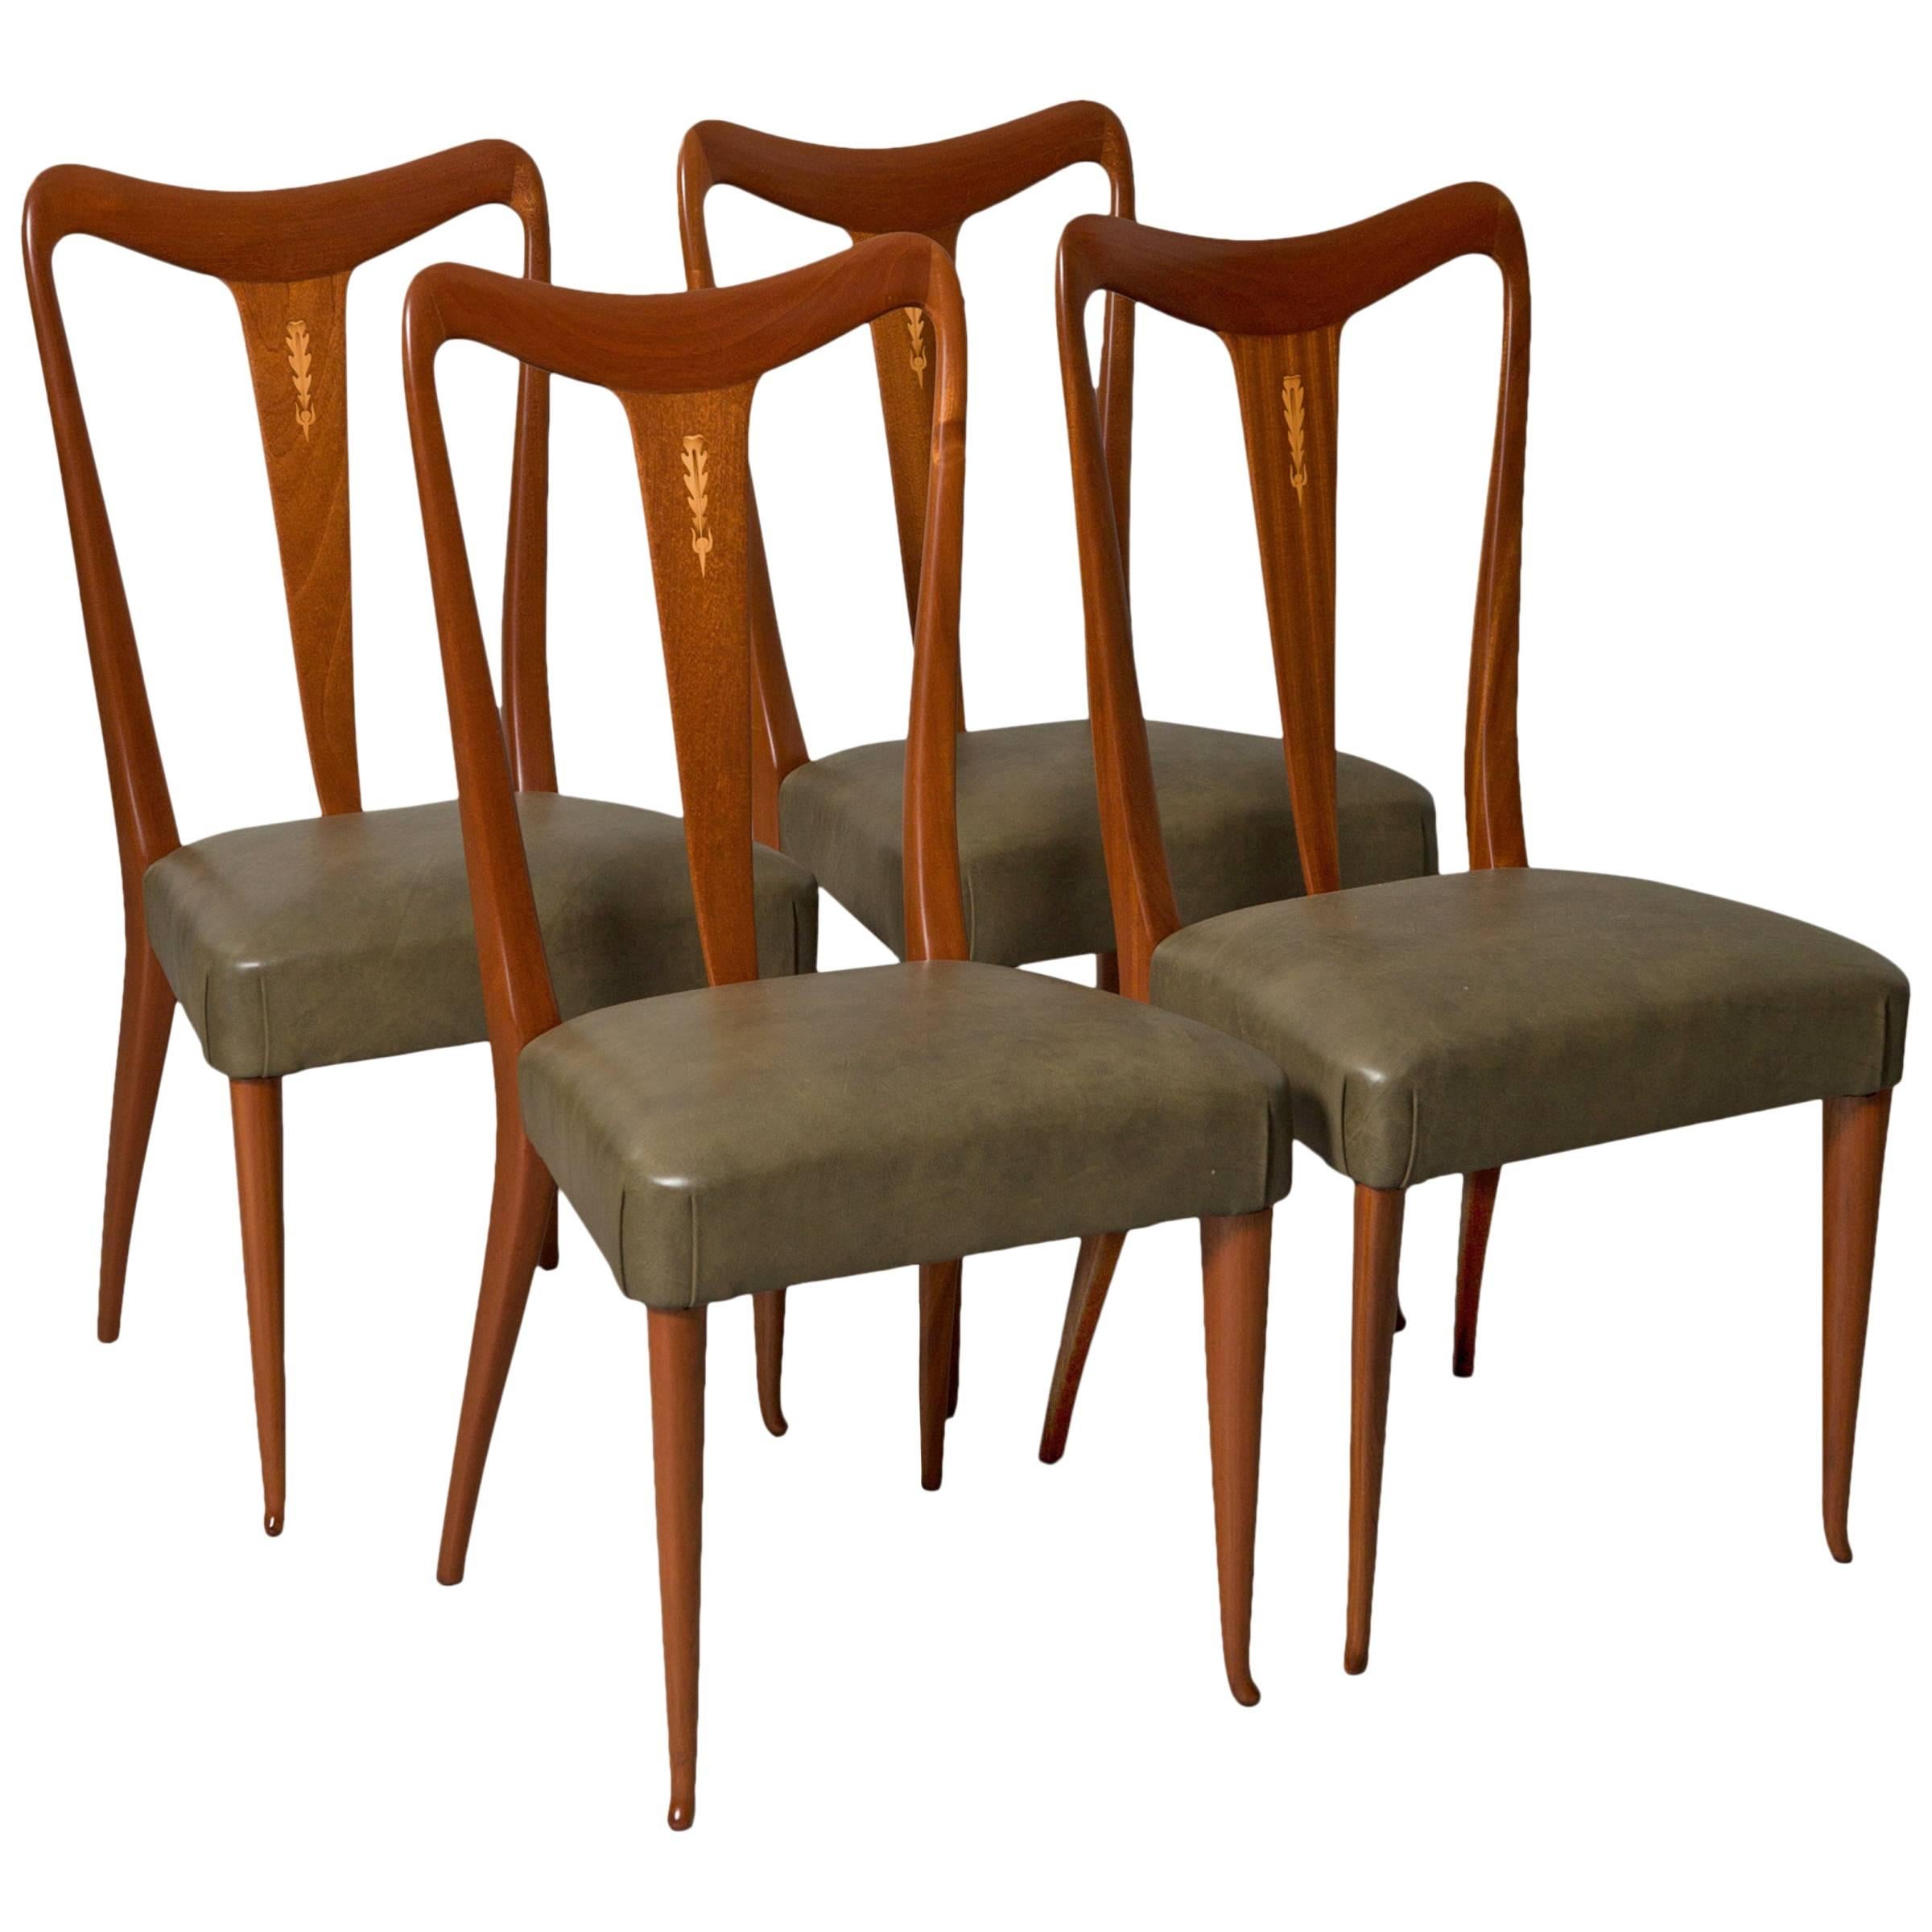 Four Elegant Italian Moderne Dining/Side Chairs